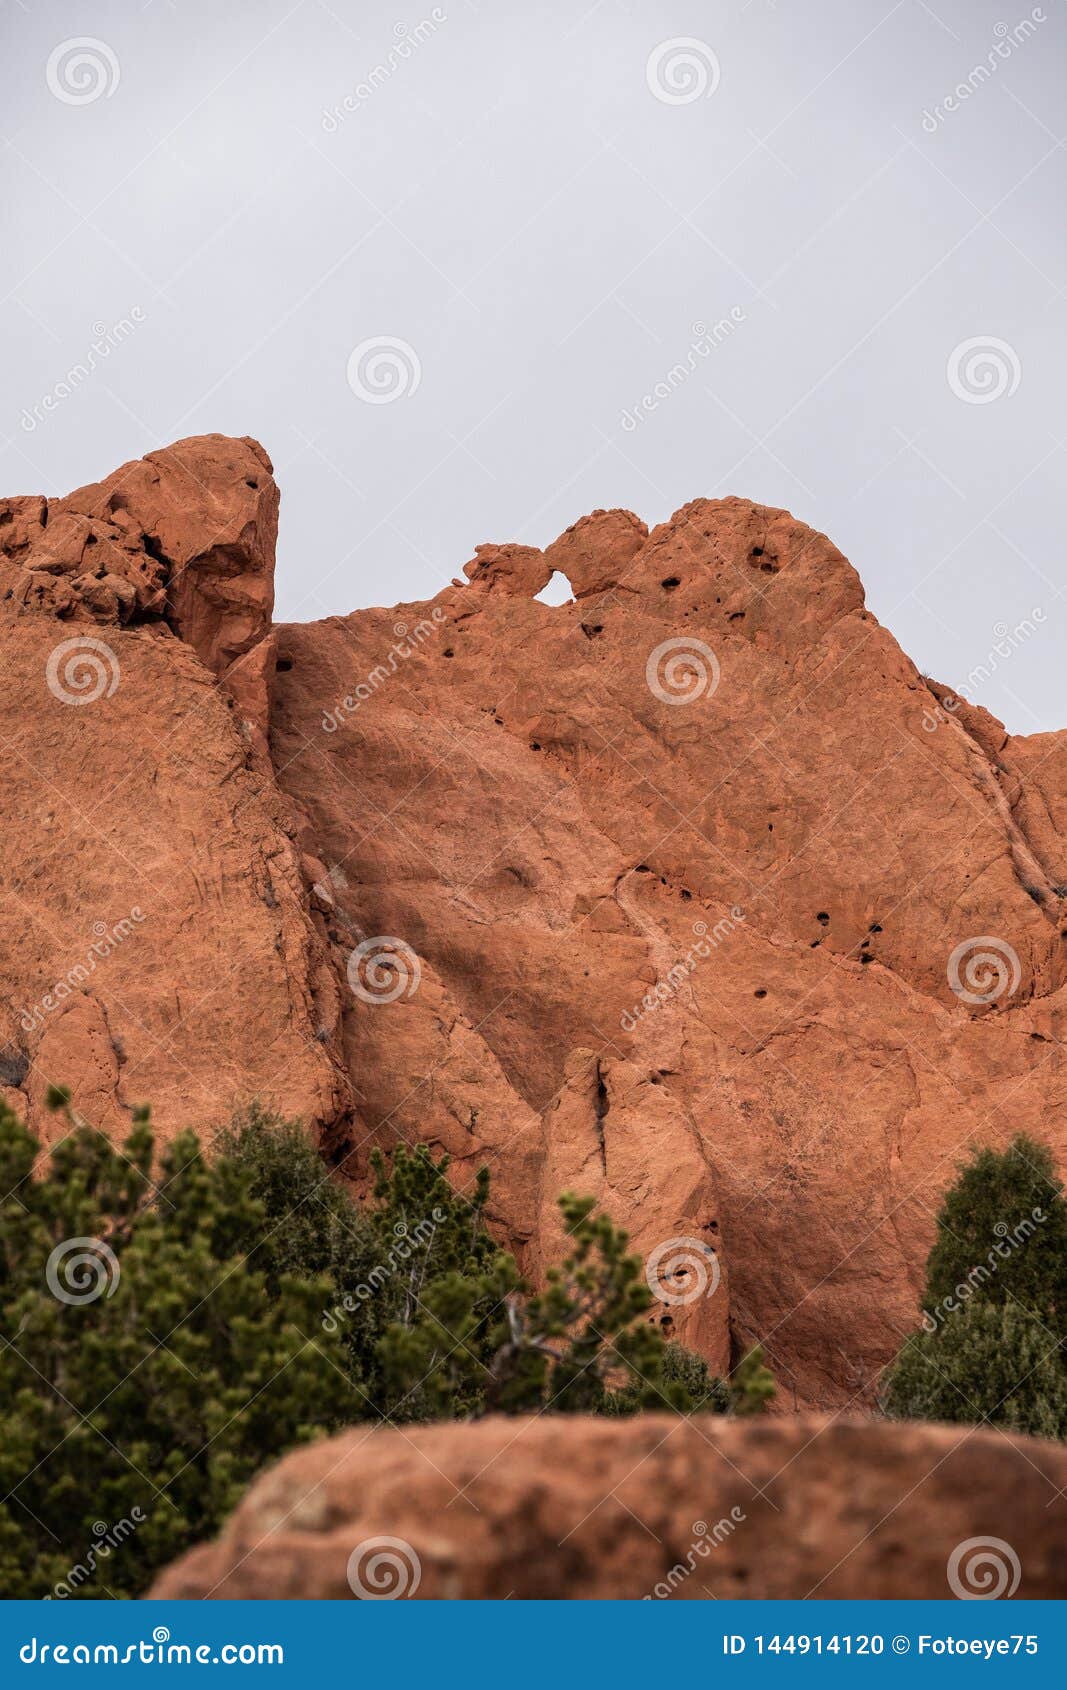 Kissing Camels Colorado Springs Garden Of The Gods Rocky